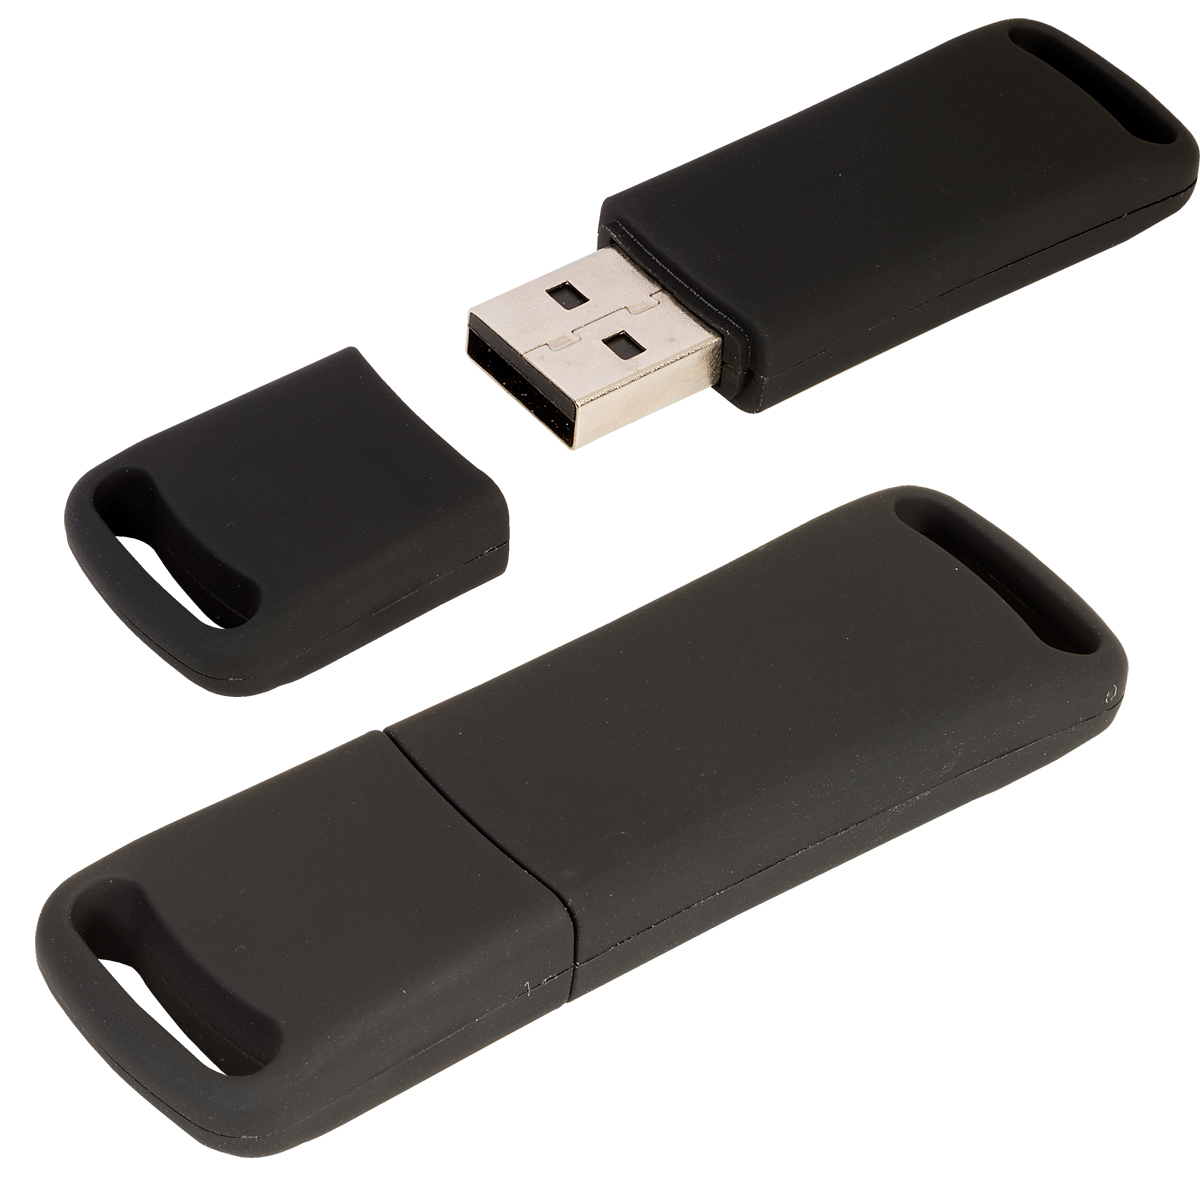 Rubberized USB Memory Flash Drive - 4GB